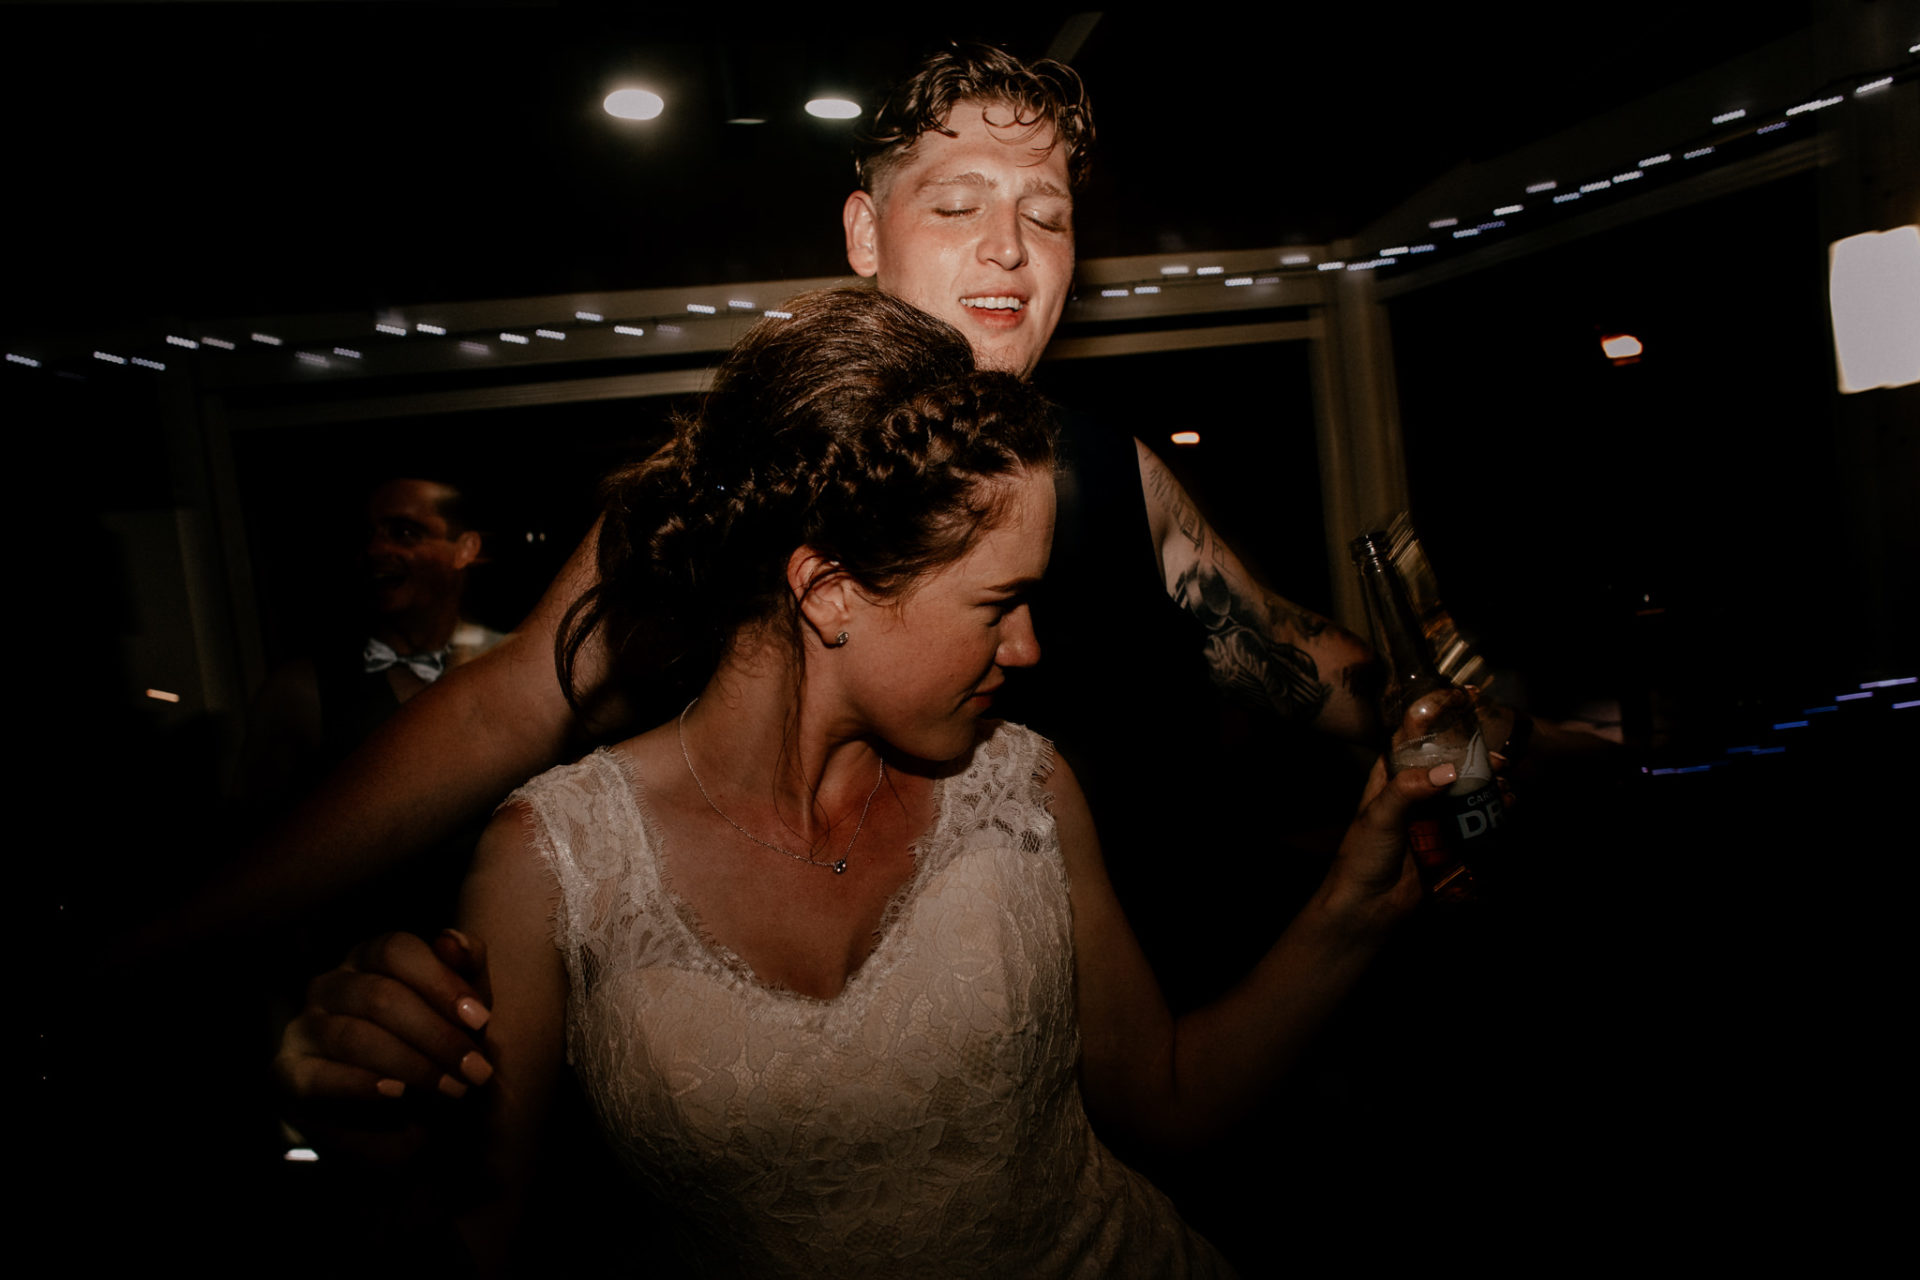 backyard wedding melbourne-trend 2019-party-first dance-bride groom-